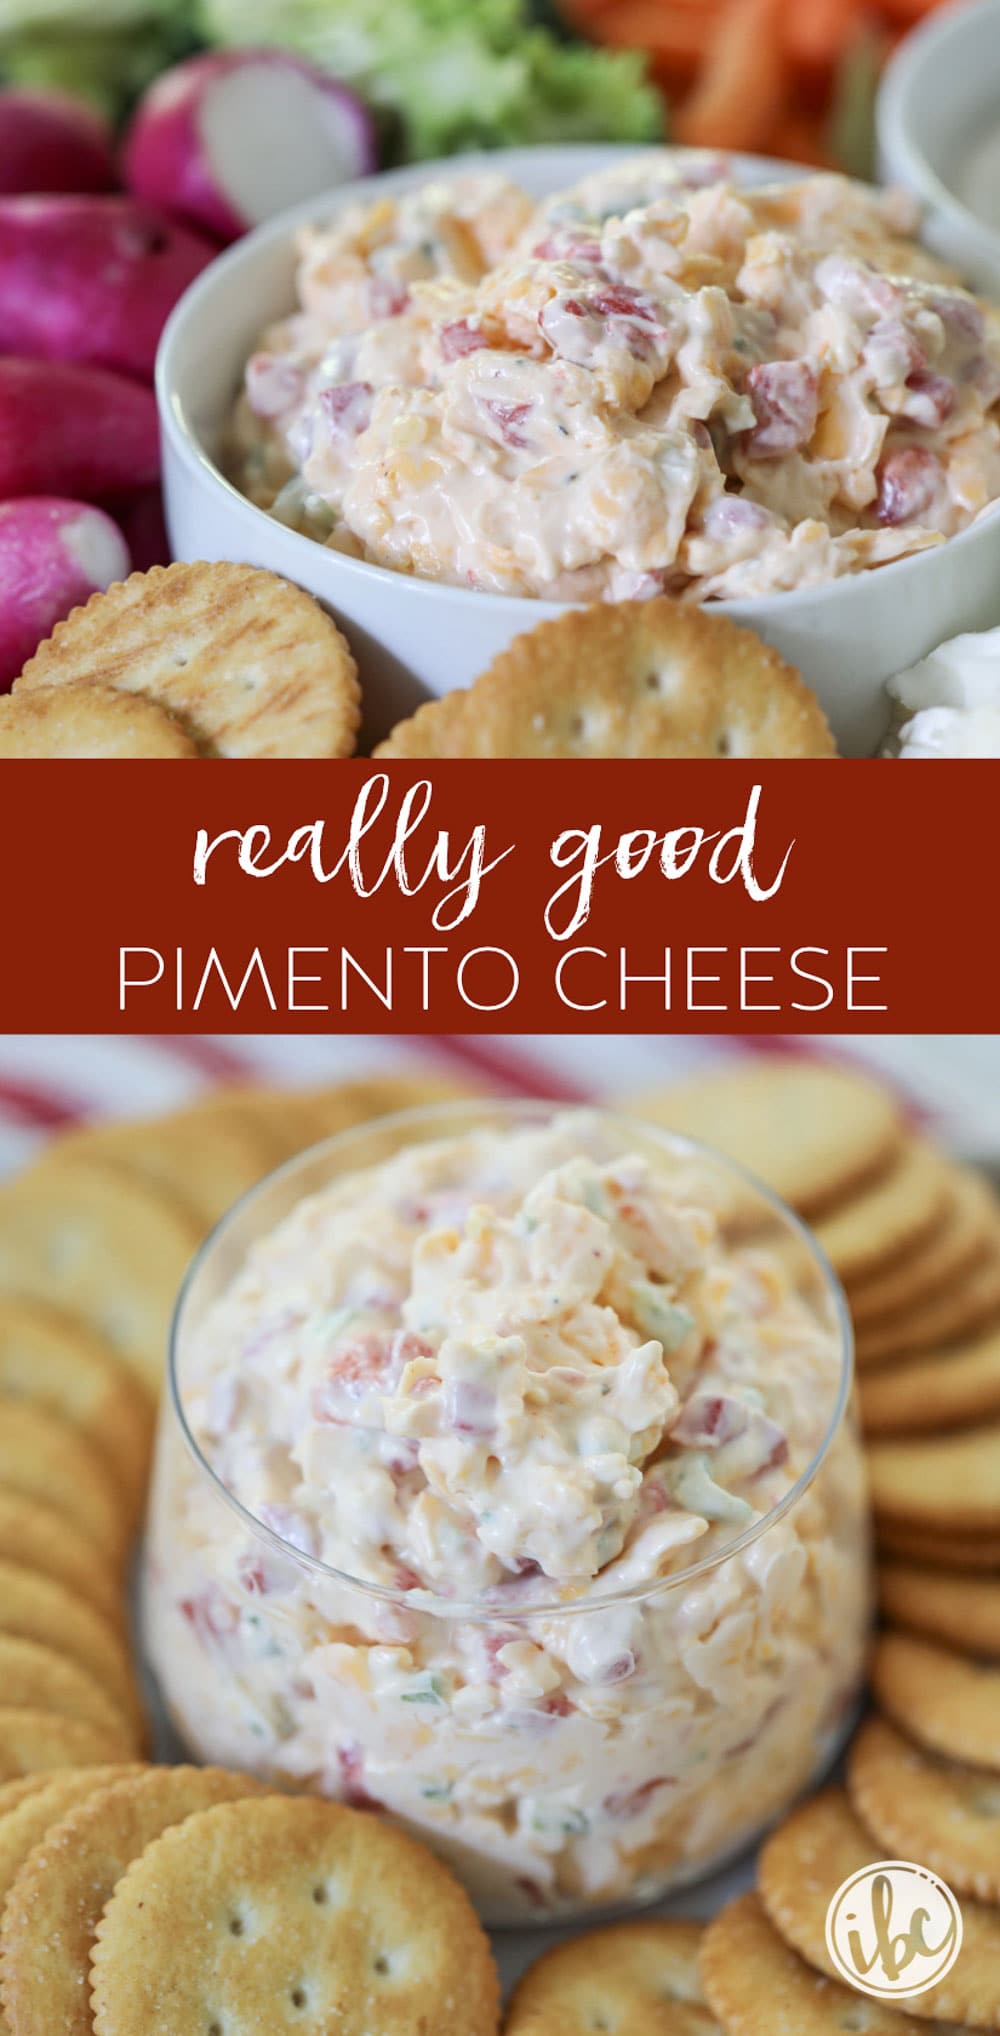 My recipe for Really Good Pimento Cheese! #pimento #cheese #recipe #dip #spread #appetizer